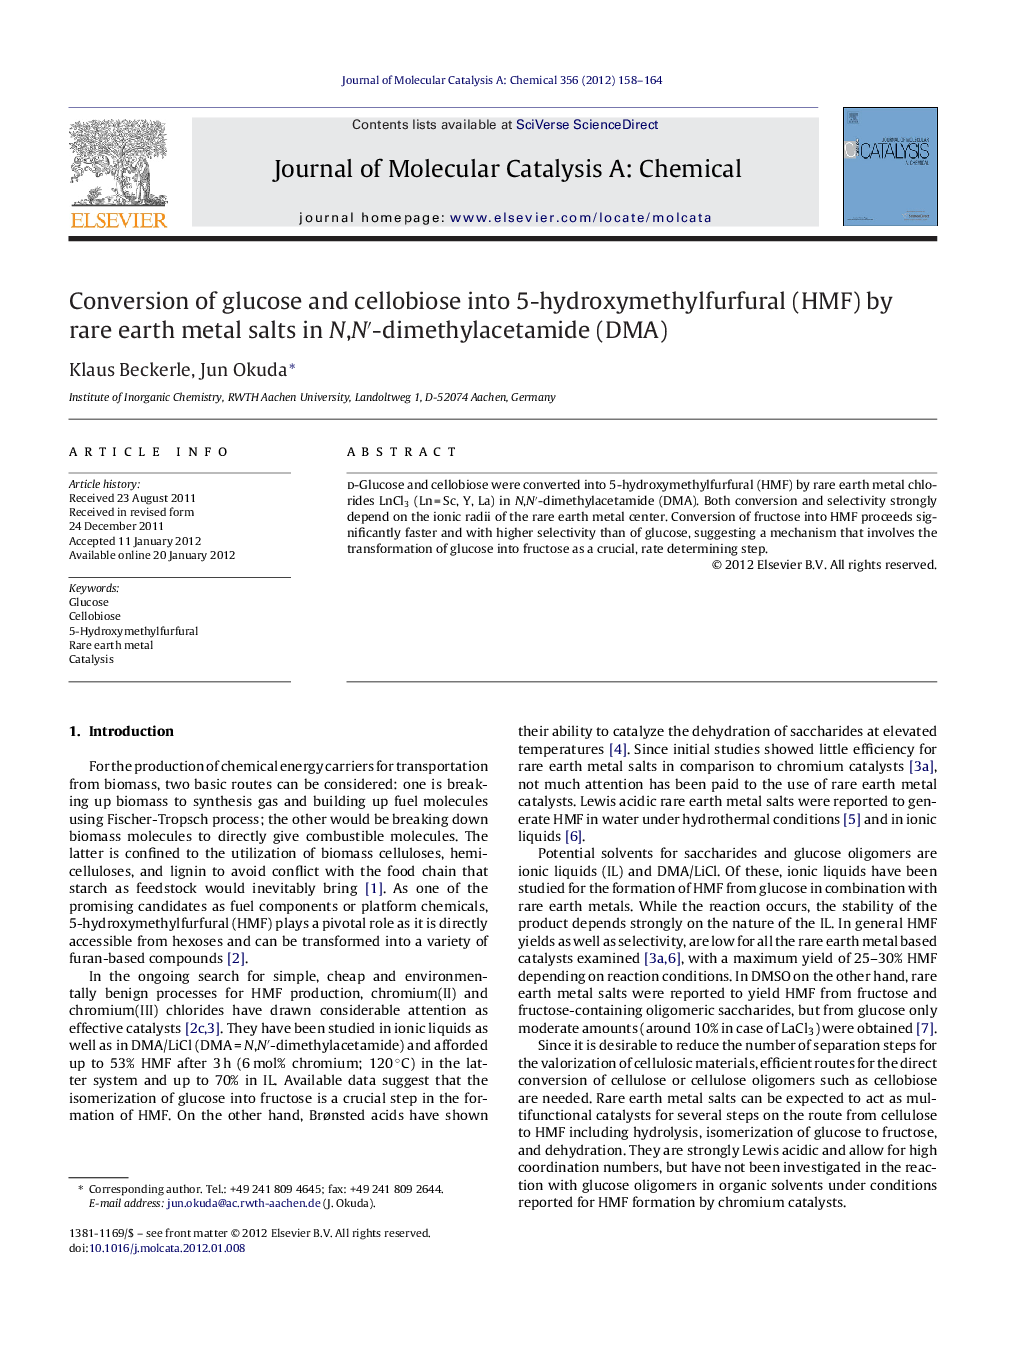 Conversion of glucose and cellobiose into 5-hydroxymethylfurfural (HMF) by rare earth metal salts in N,N′-dimethylacetamide (DMA)